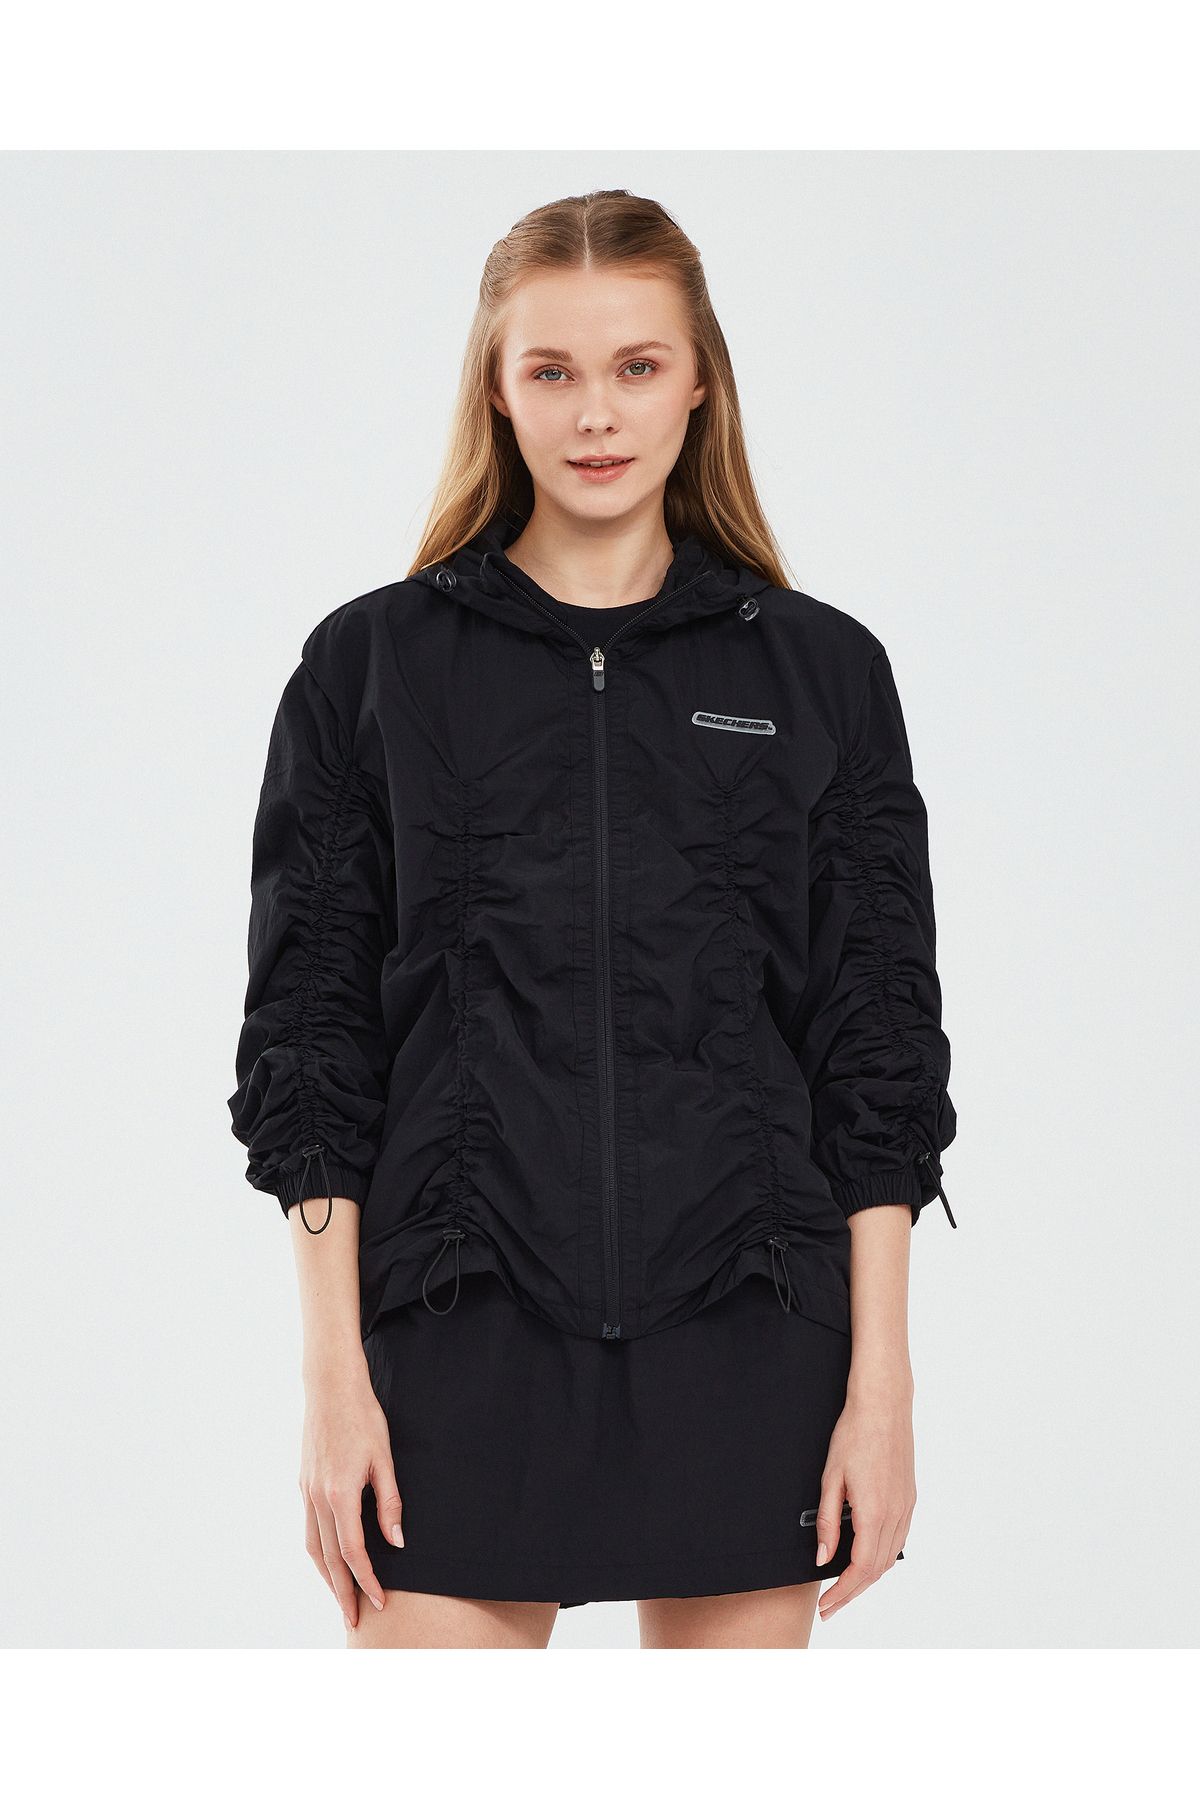 Skechers Micro Collection W Hooded Jacket Kadın Siyah Ceket S241094-001